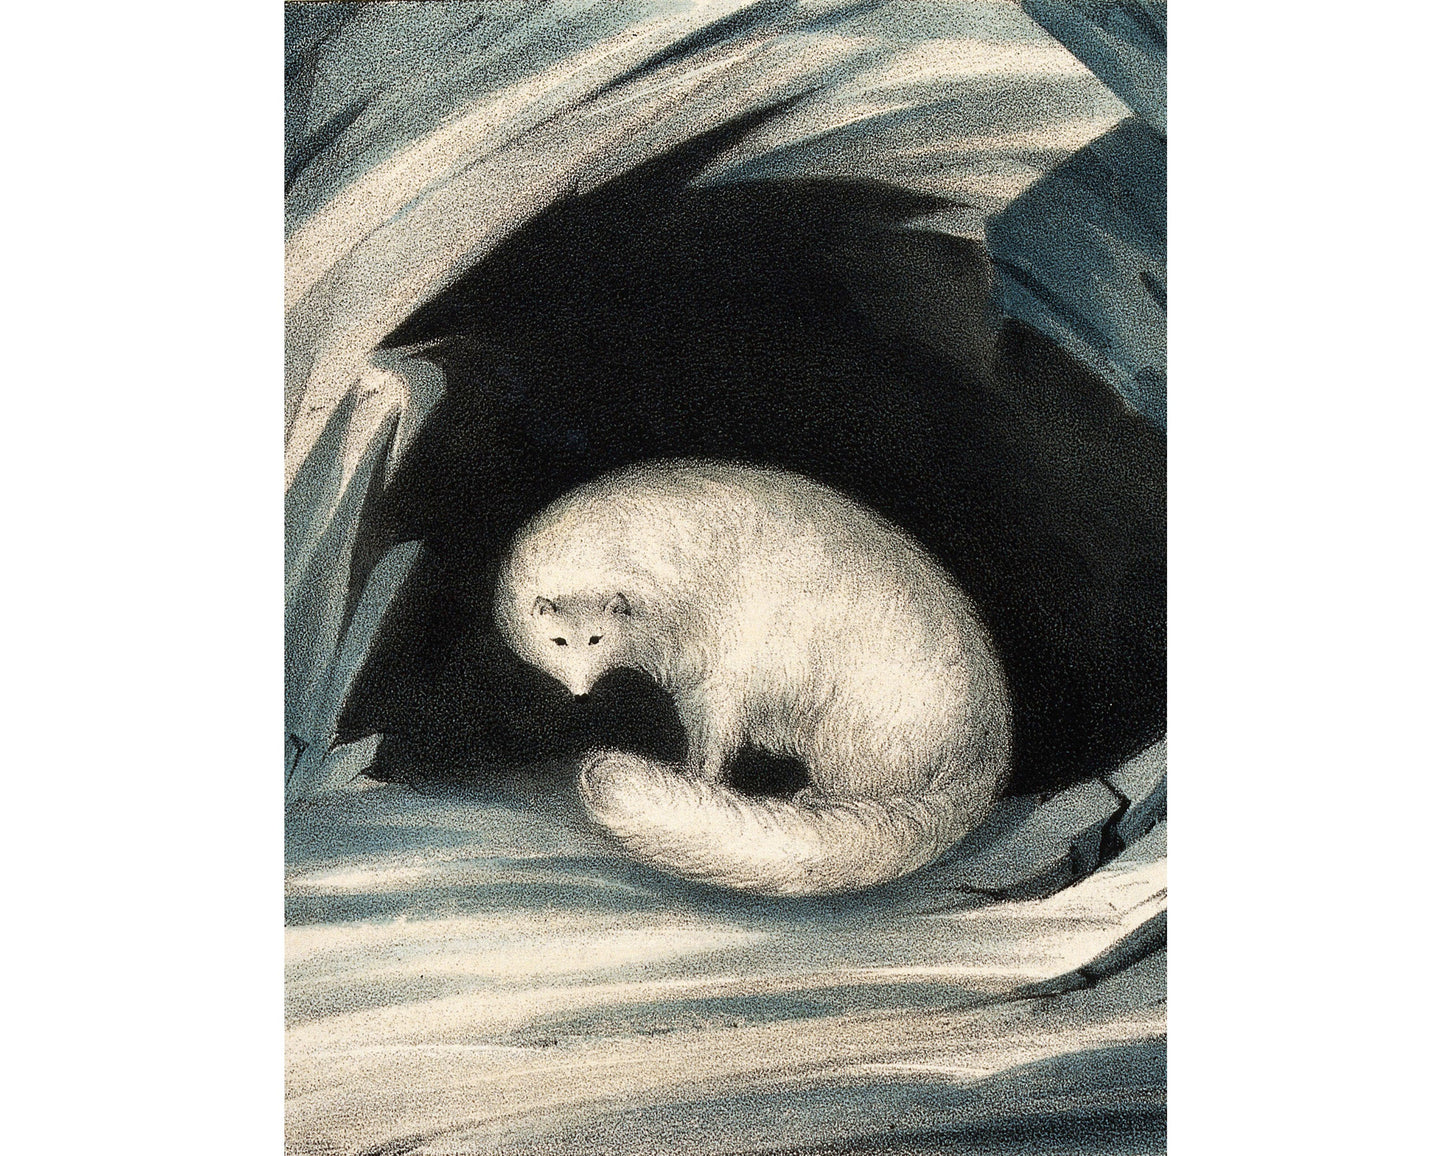 Arctic fox fine art print | Vintage wildlife | Winter illustration | Animal art |  Modern vintage décor | Ready to frame & gift